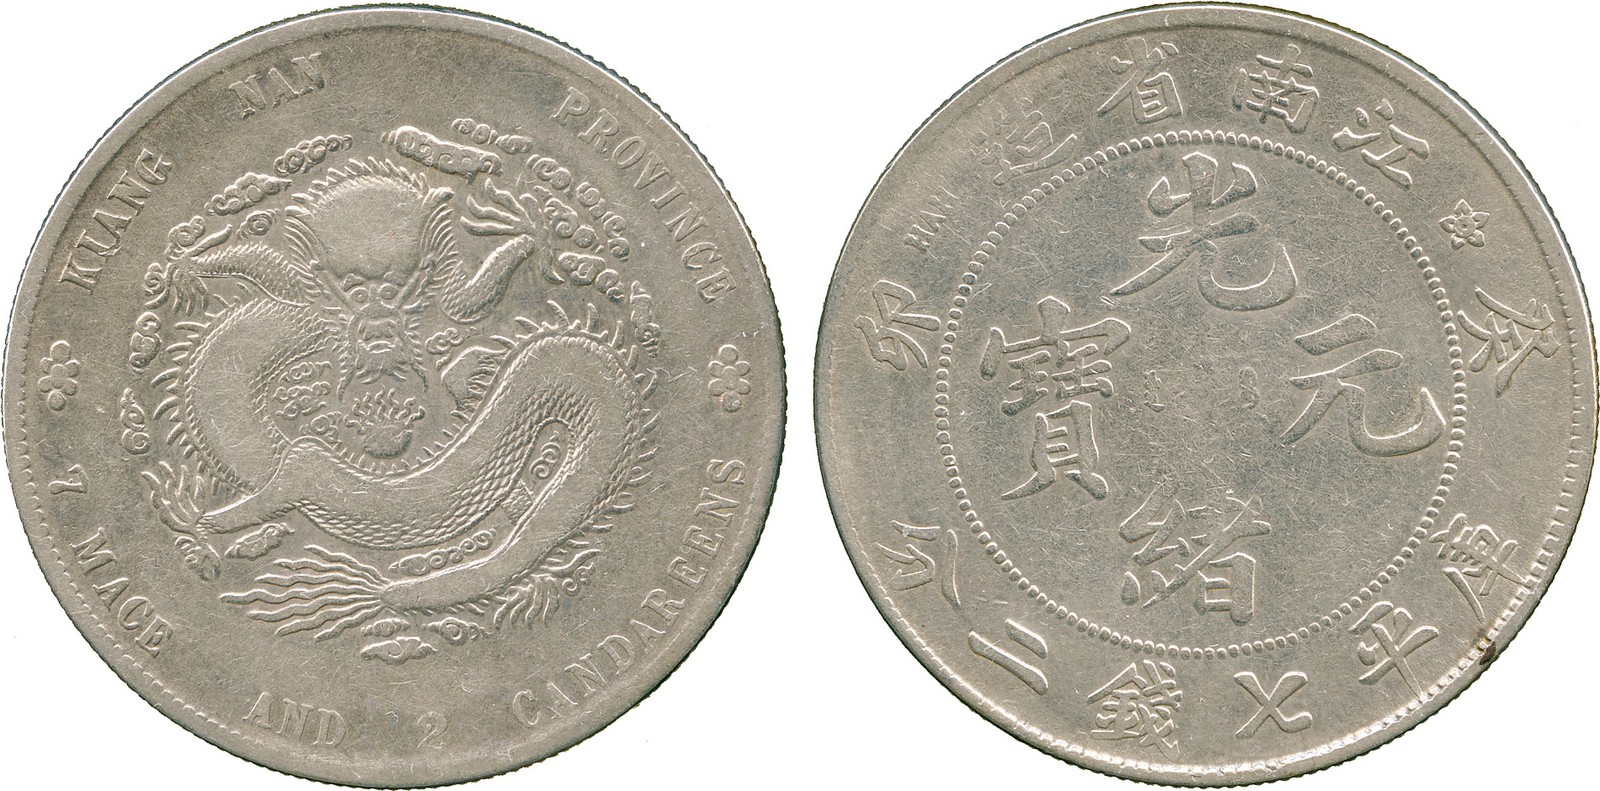 COINS, 錢幣, CHINA - PROVINCIAL ISSUES, 中國 - 地方發行, Kiangnan Province 江南省: Silver Dollar, CD1903 癸卯,